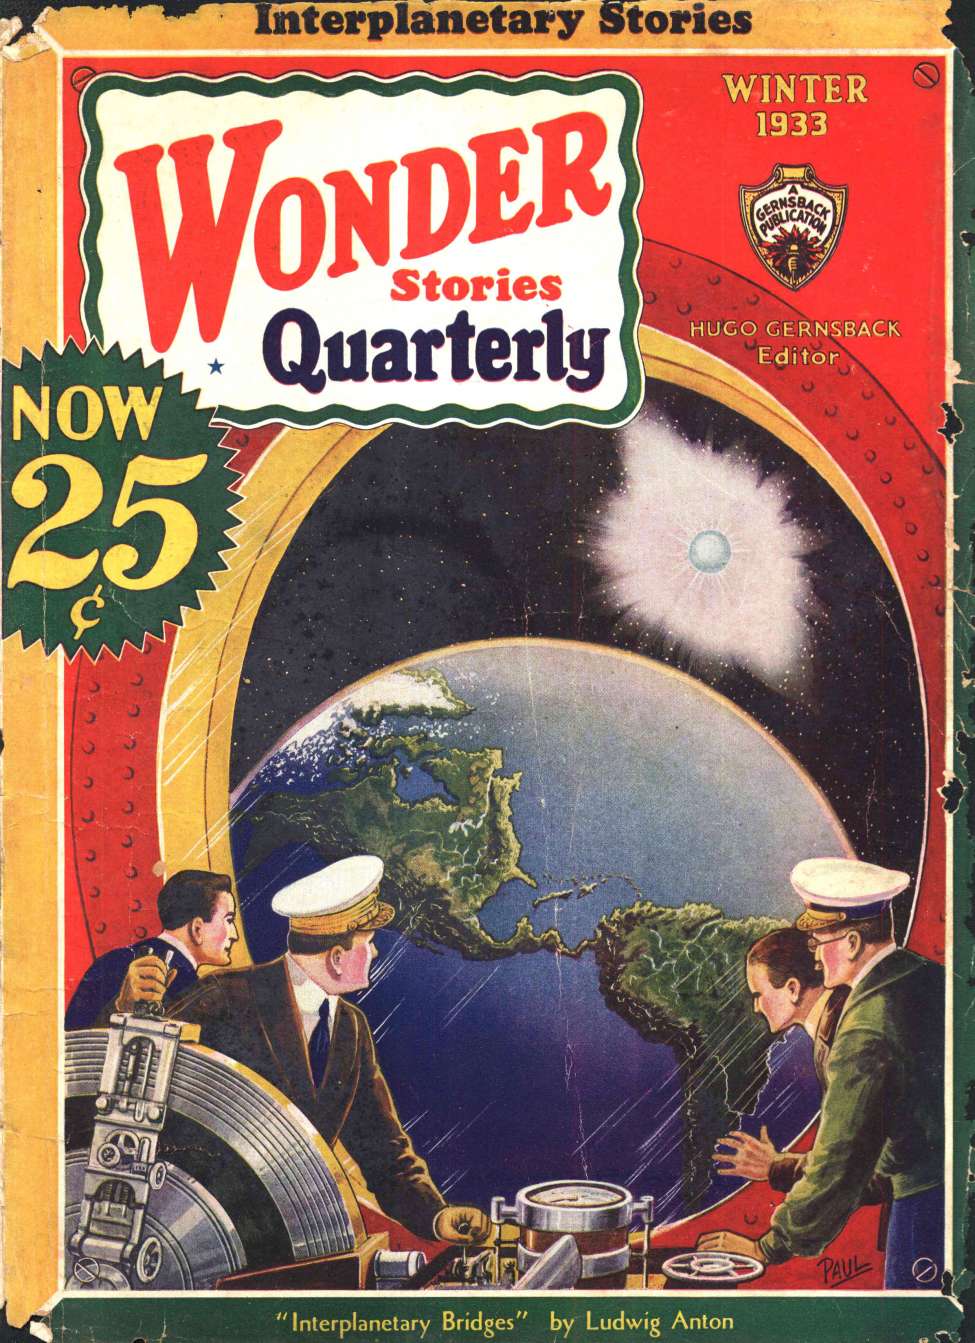 Book Cover For Wonder Stories Quarterly v4 2 - Interplanetary Bridges - Ludwig Anton